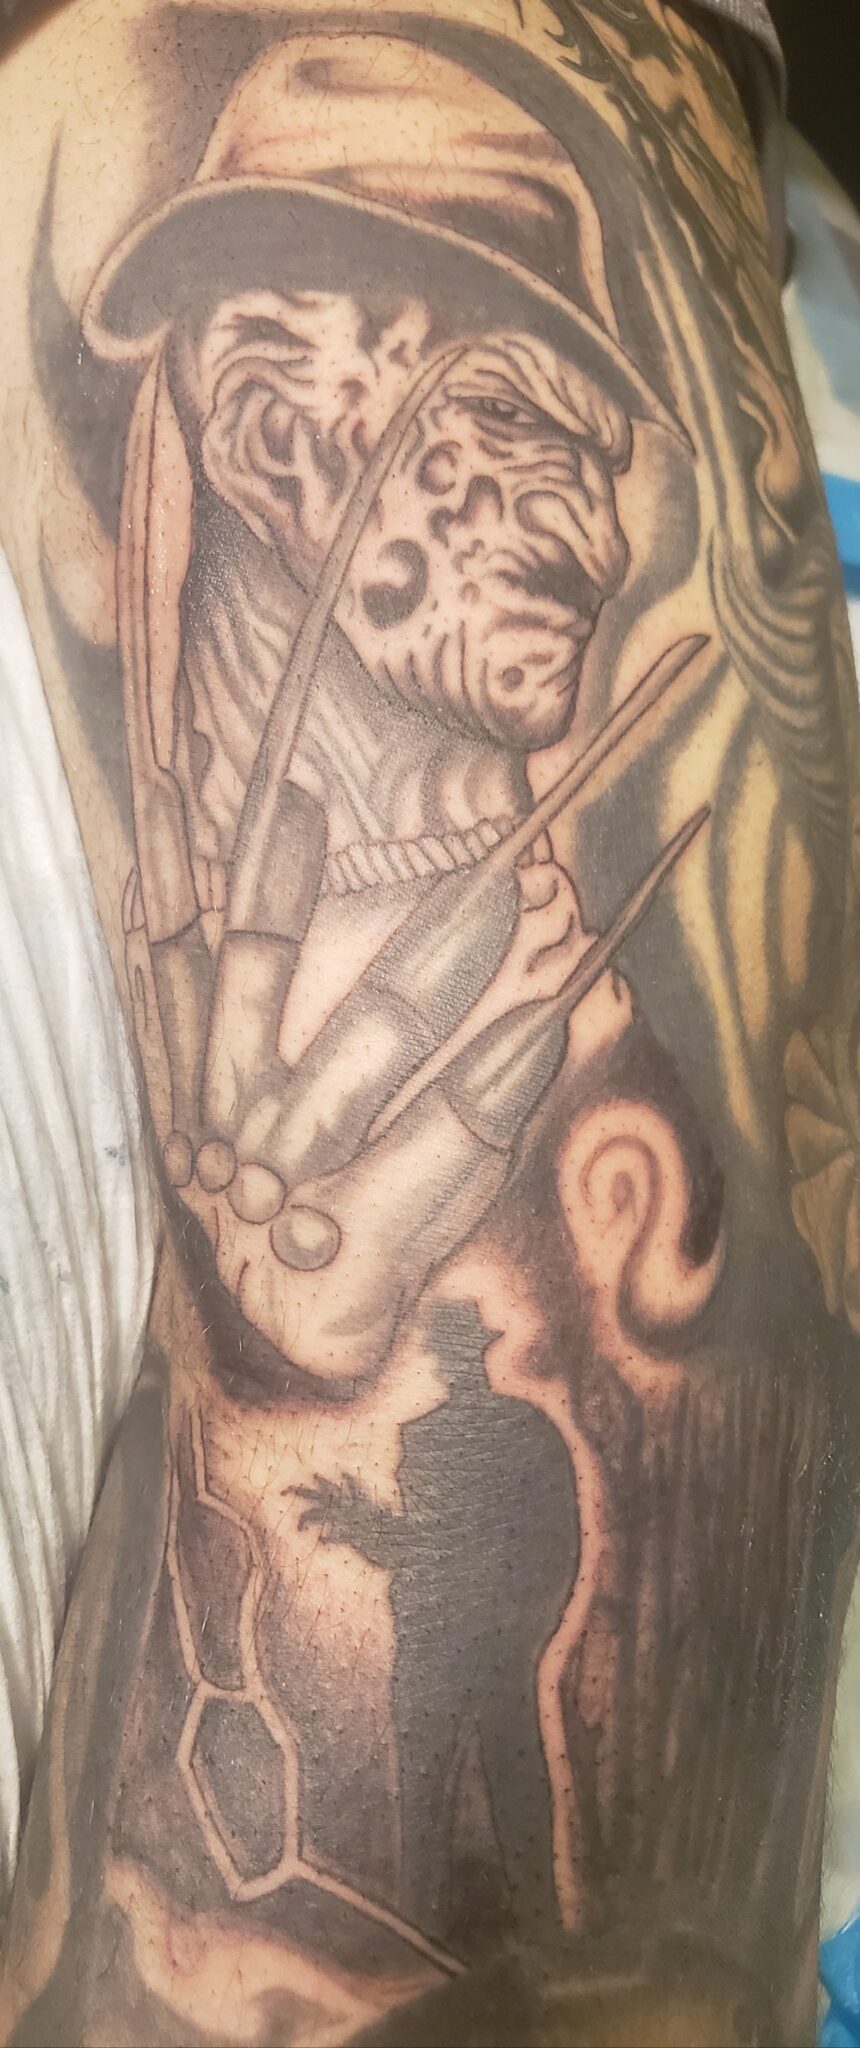 Jason Voorhees Freddy Krueger tattoo nightmare on Elm Street Friday the  13th horror sleeve traditional style ta  Freddy krueger tattoo Tattoo  nightmares Tattoos